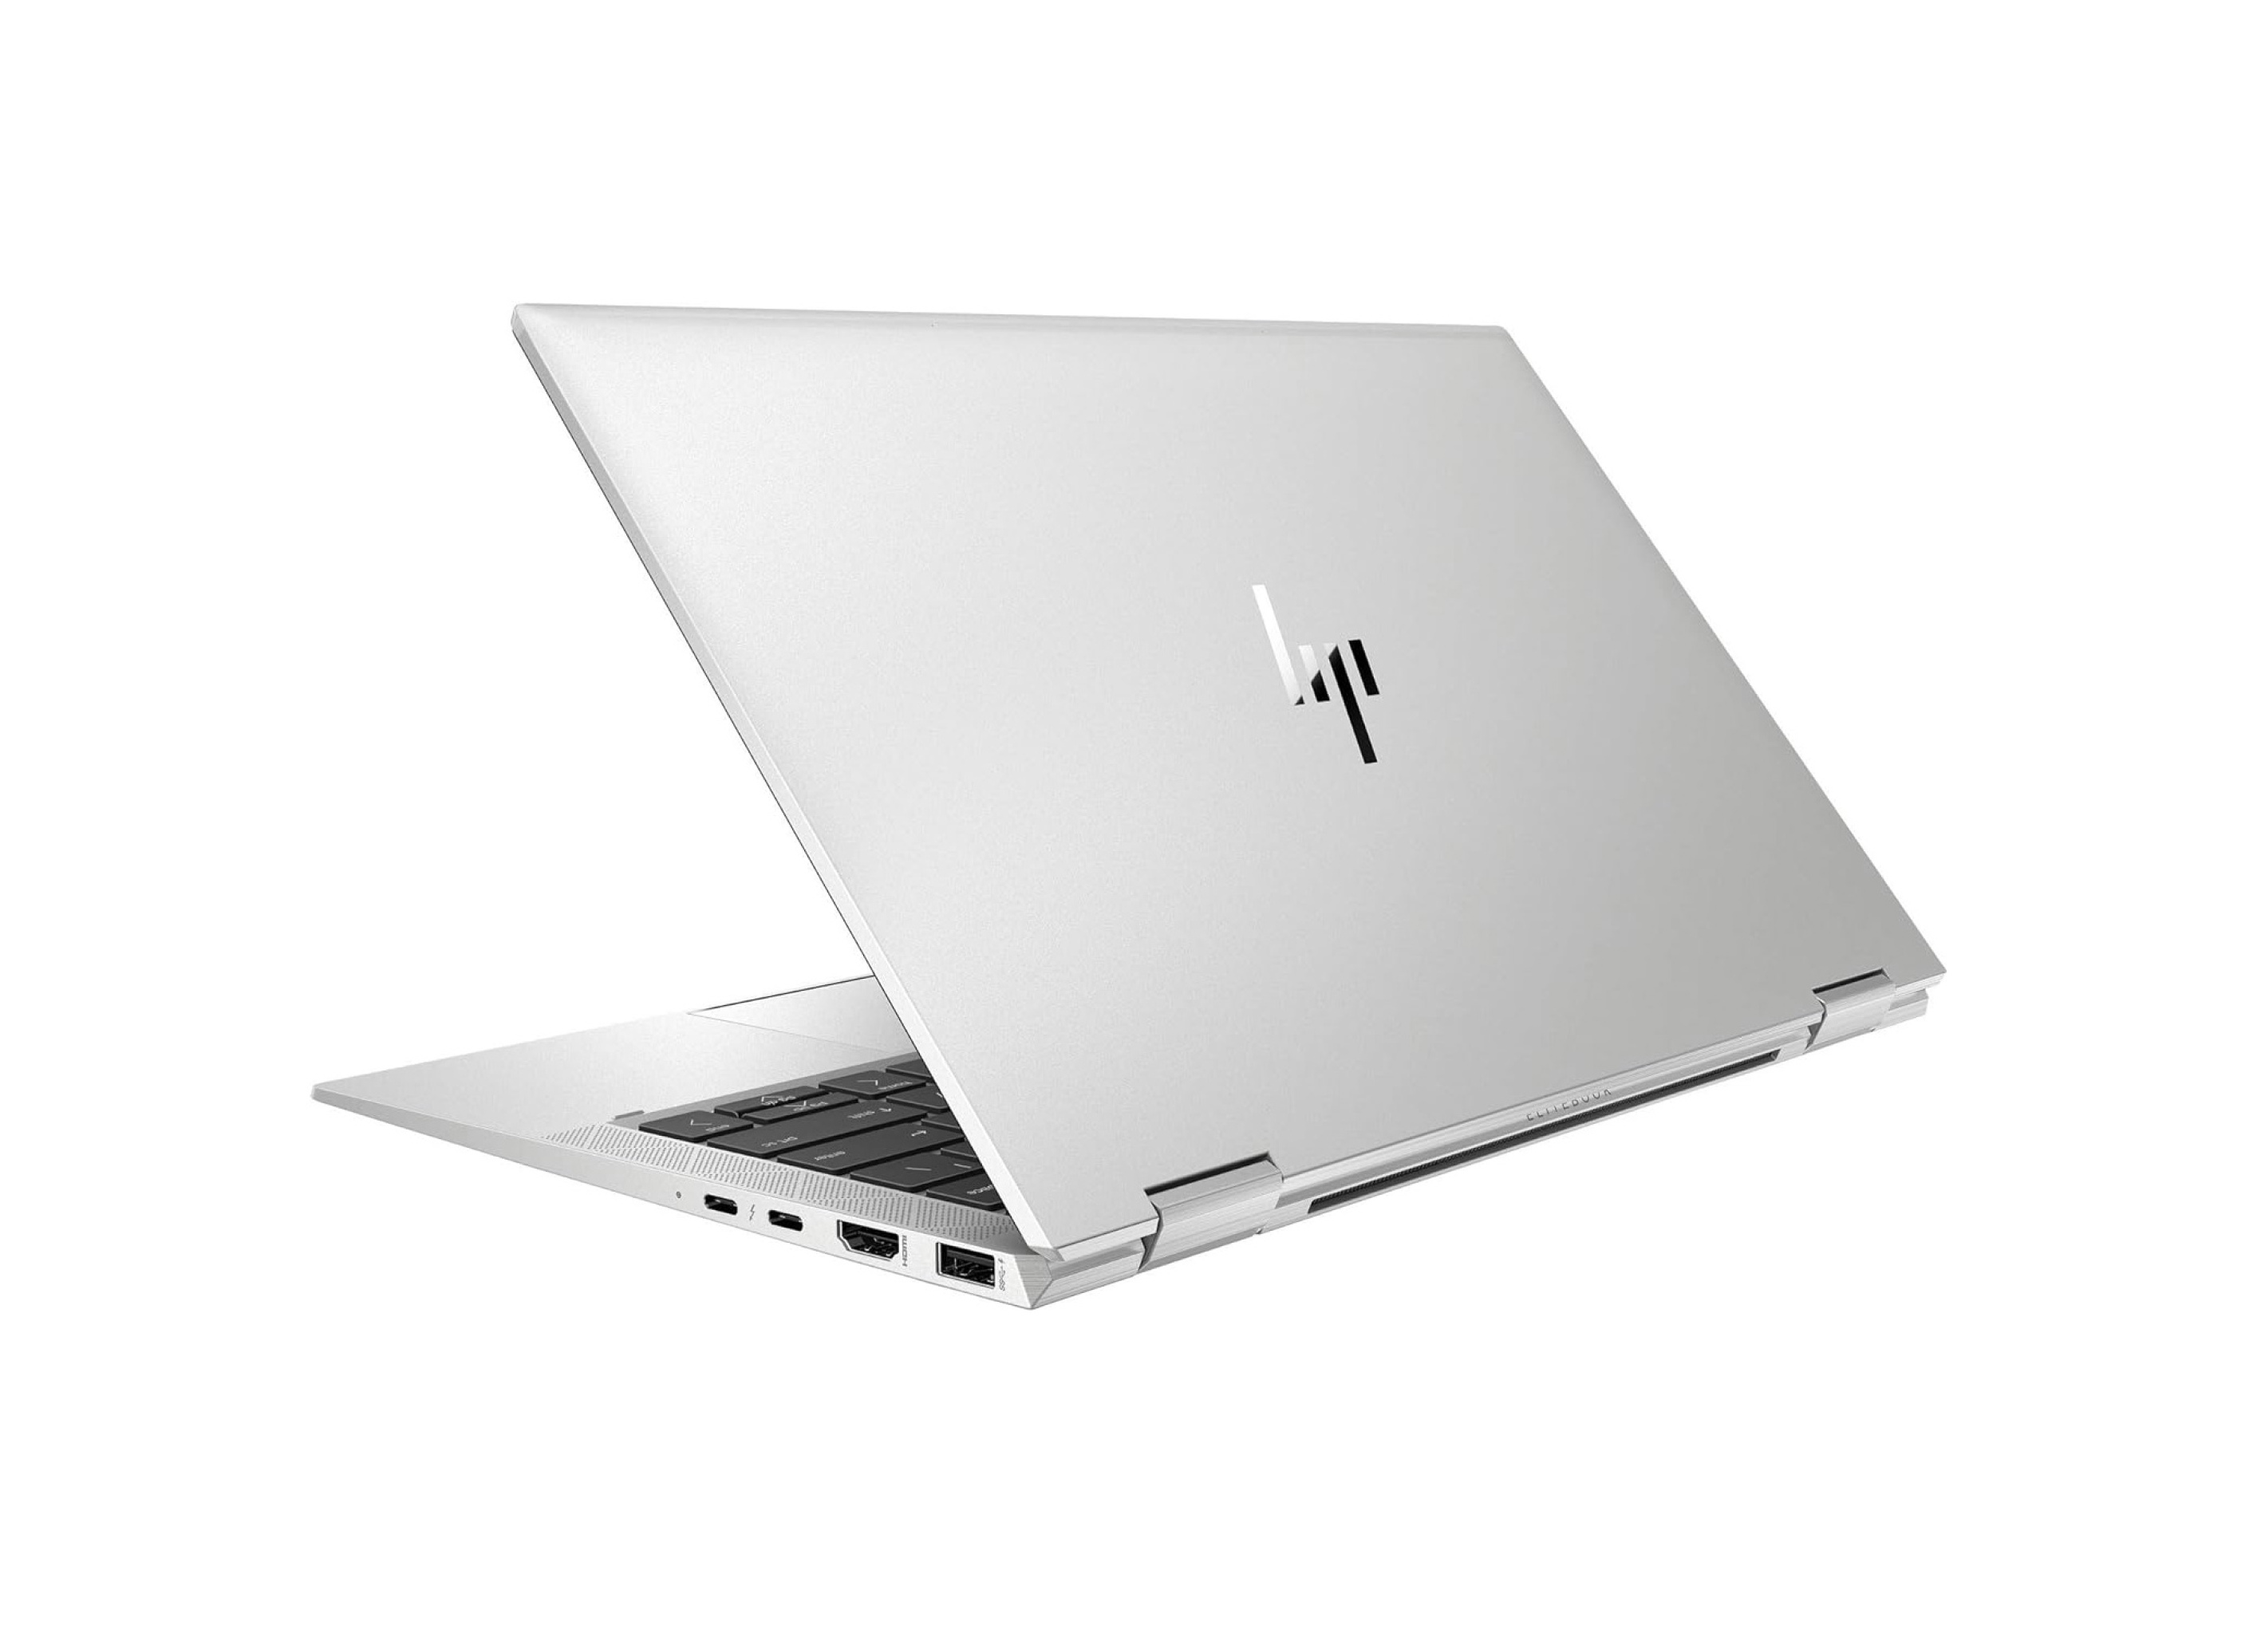  خرید و قیمت لپ تاپ HP Elite 1040 G8 X360 i5 11th gen | لاکچری لپ تاپ 